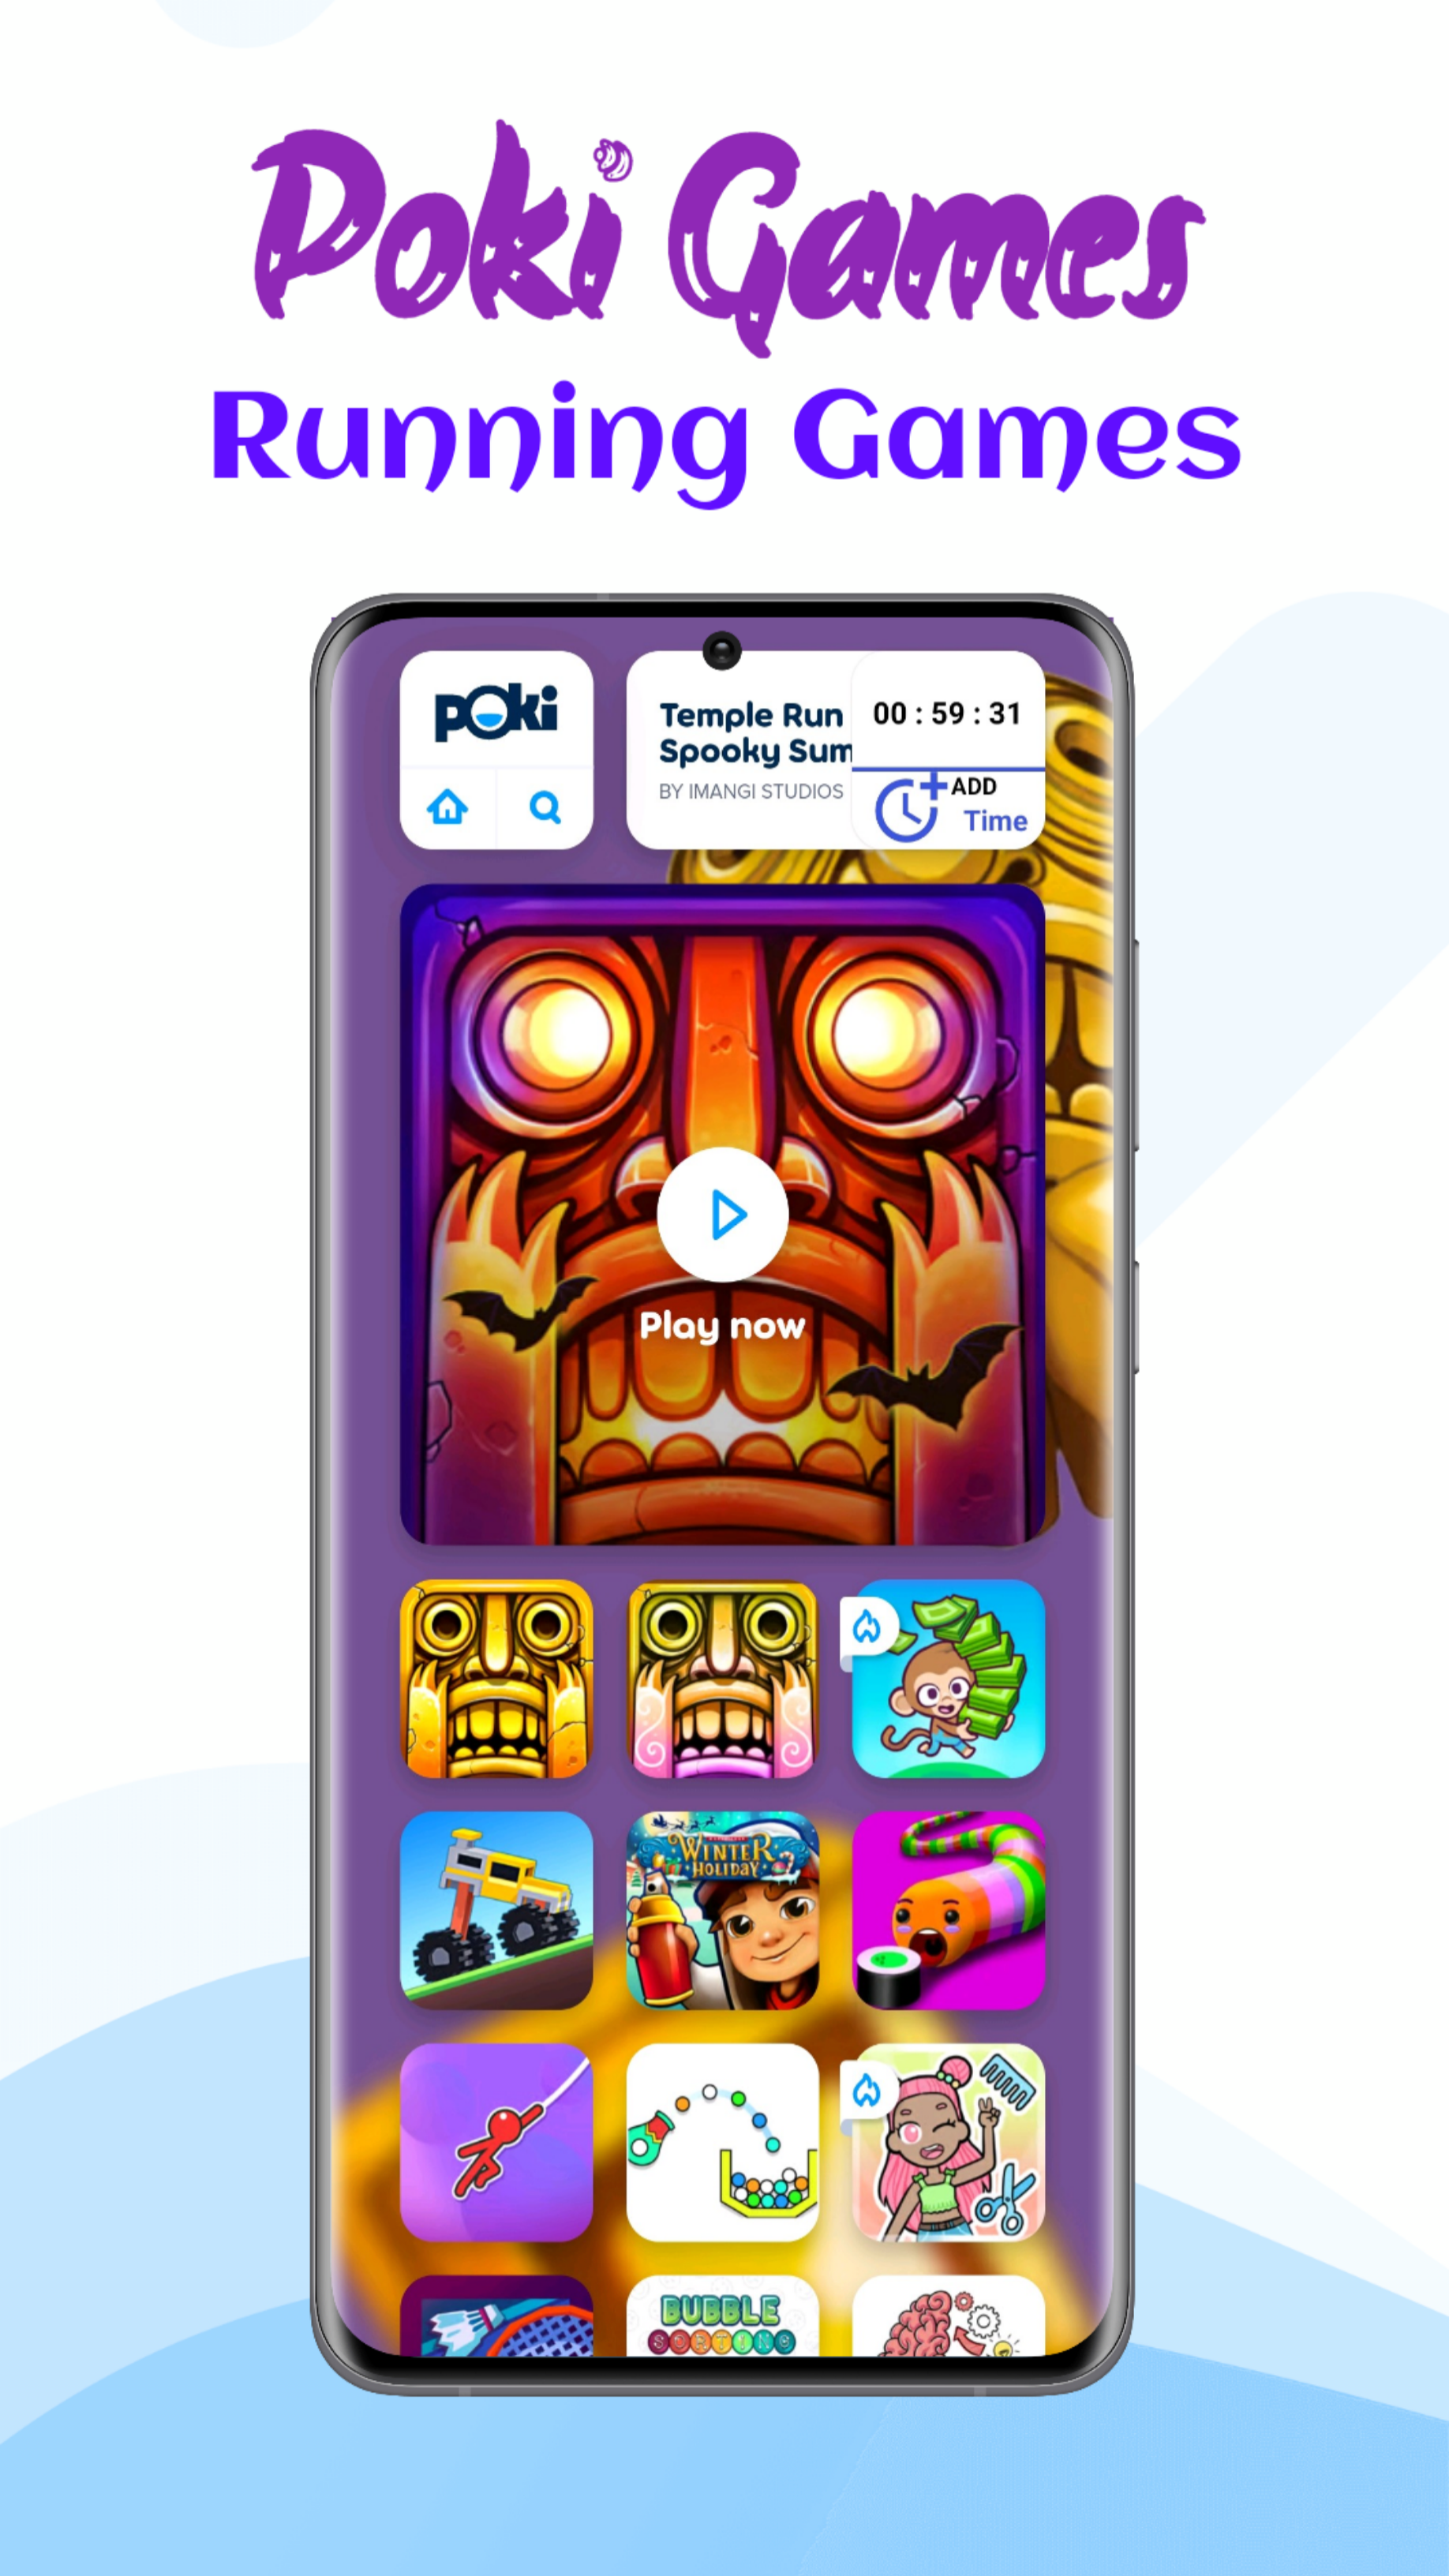 Poki Games APK (Android Game) - Free Download